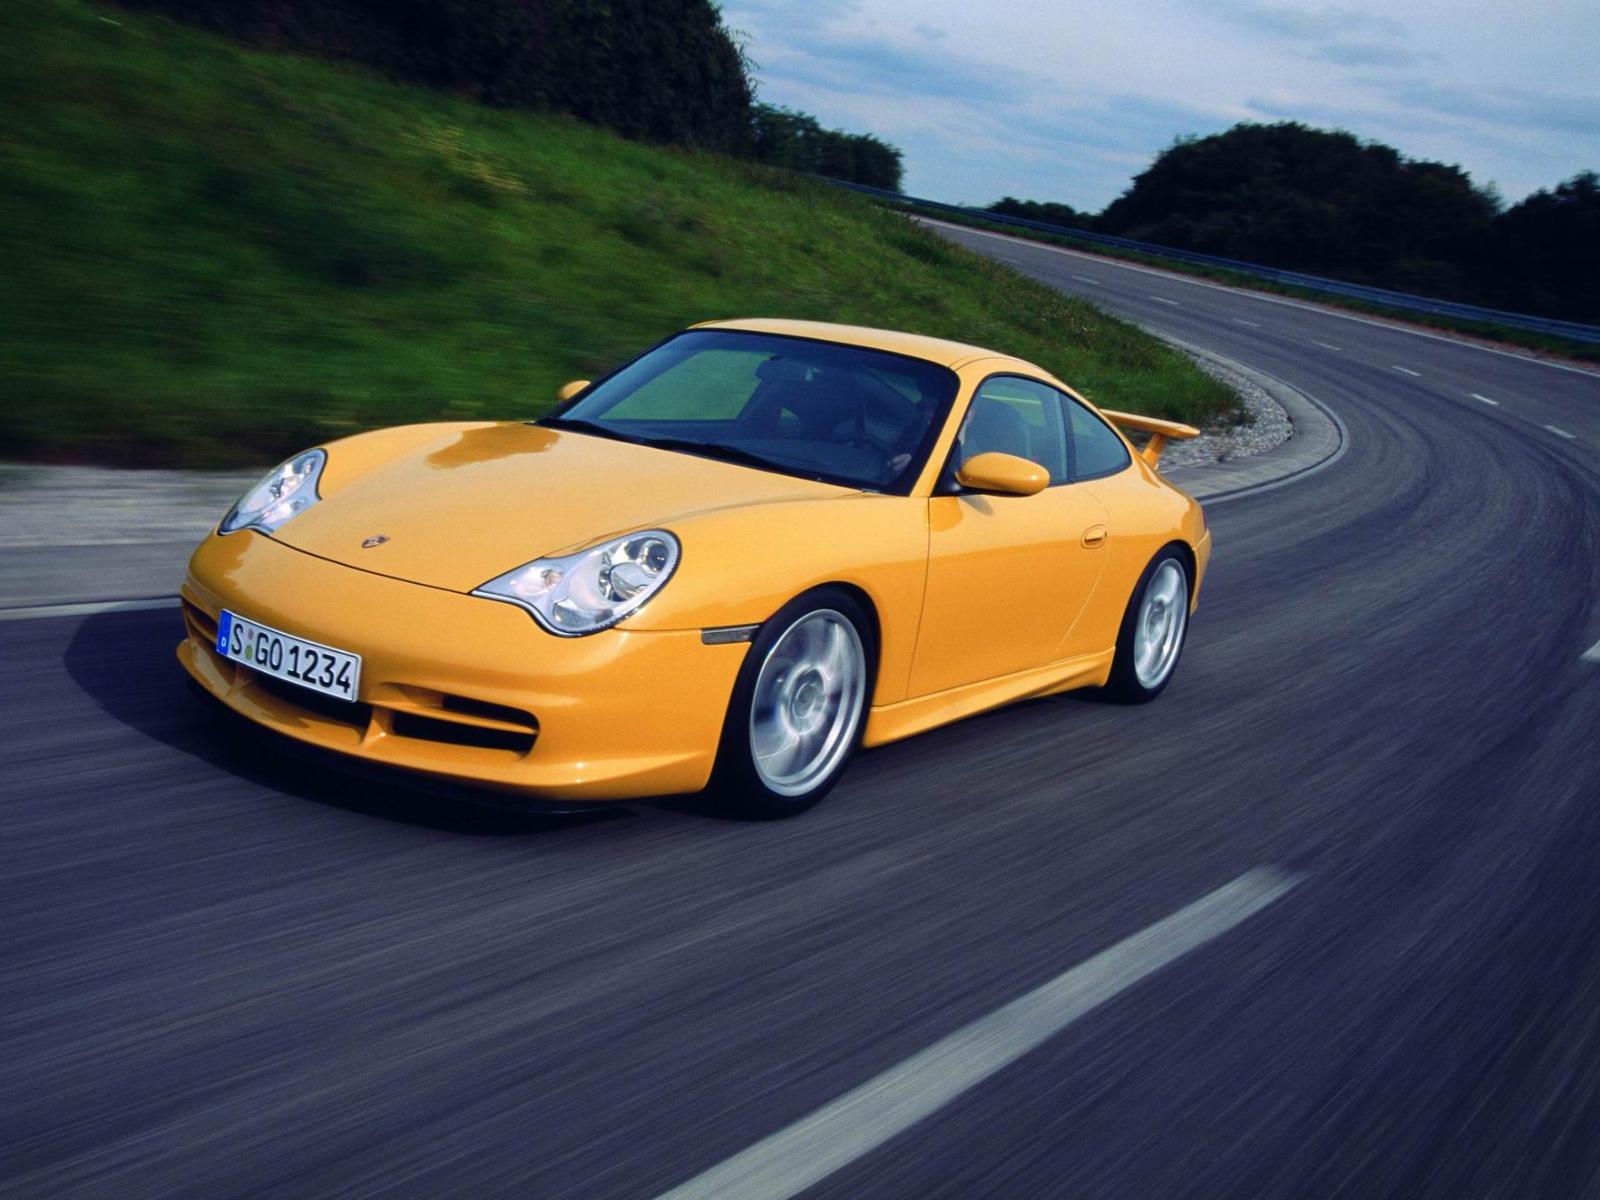 Porsche 996 911 GT3 Cars Wallpapers | Car Pictures | Cars Wallpaper